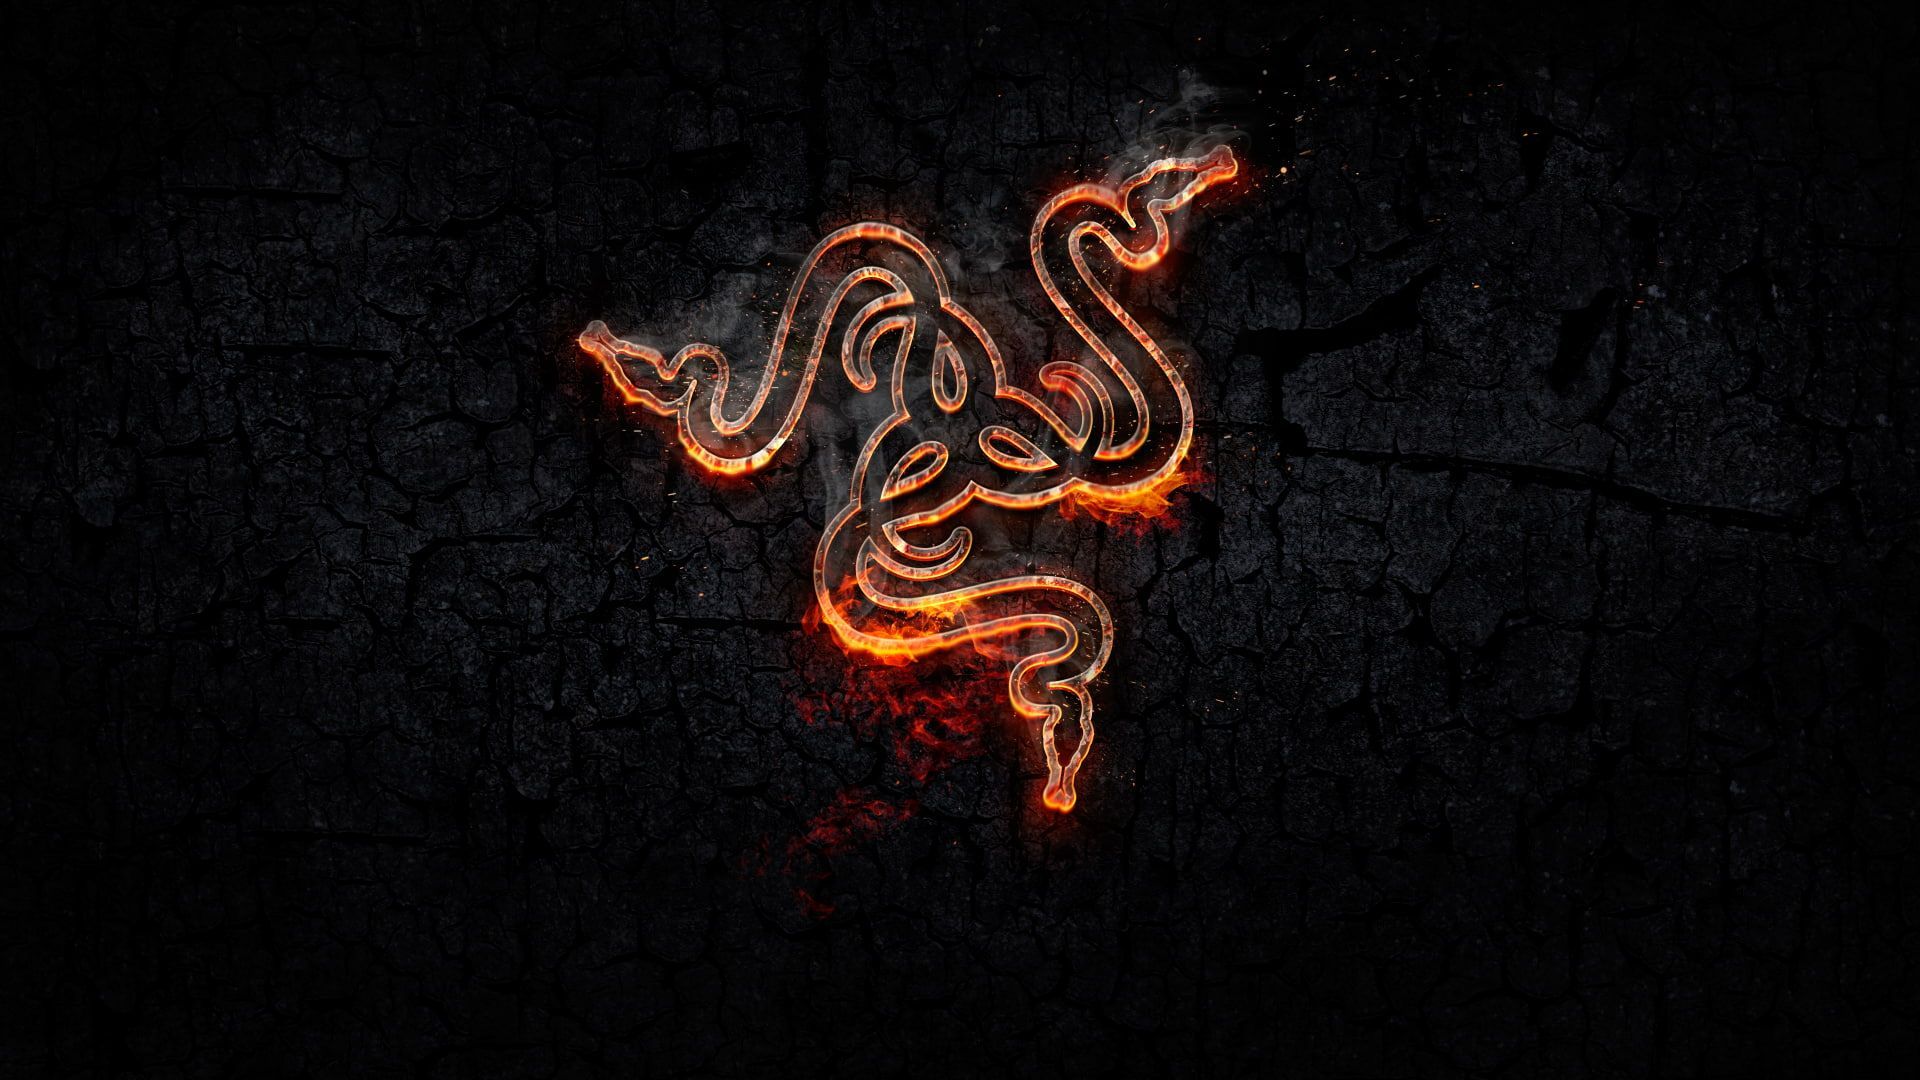 Razer Inc. #Razer #logo #snake Gaming Series #orange P #wallpaper #hdwallpaper #desktop. Black phone wallpaper, Computer wallpaper, Game wallpaper iphone